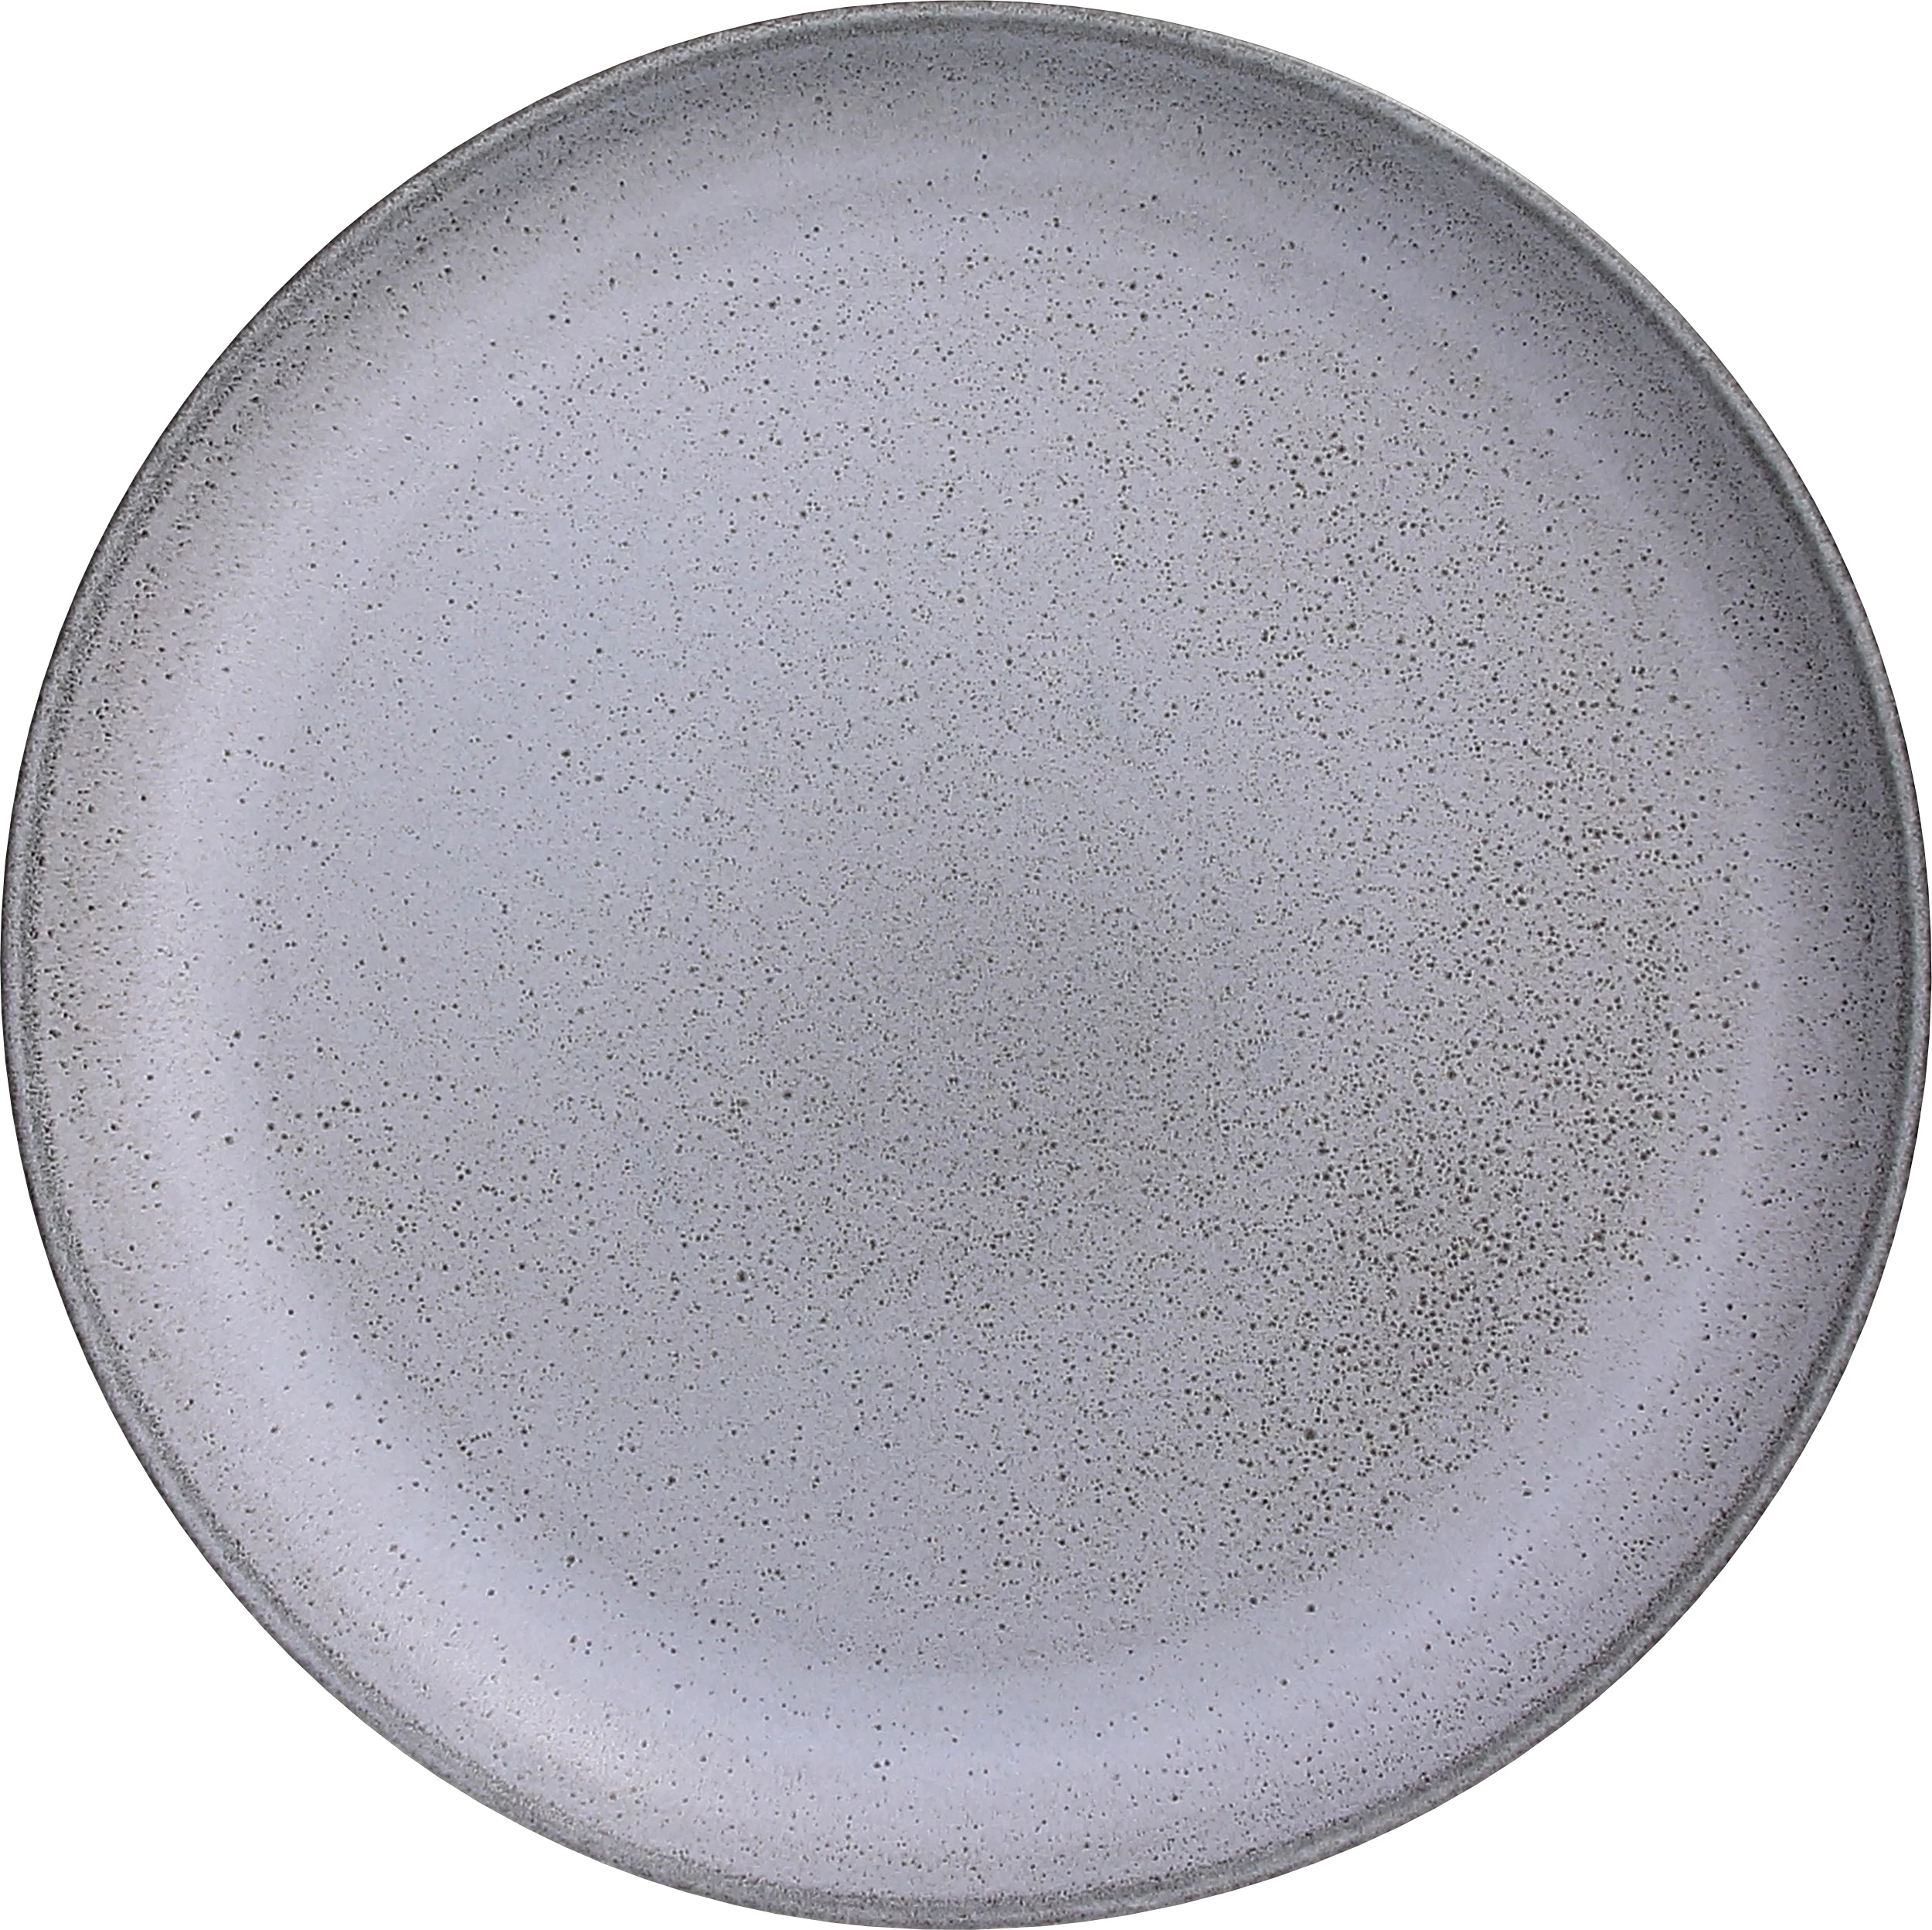 Tognana Terracotta tallerken uden fane, grå, ø28 cm